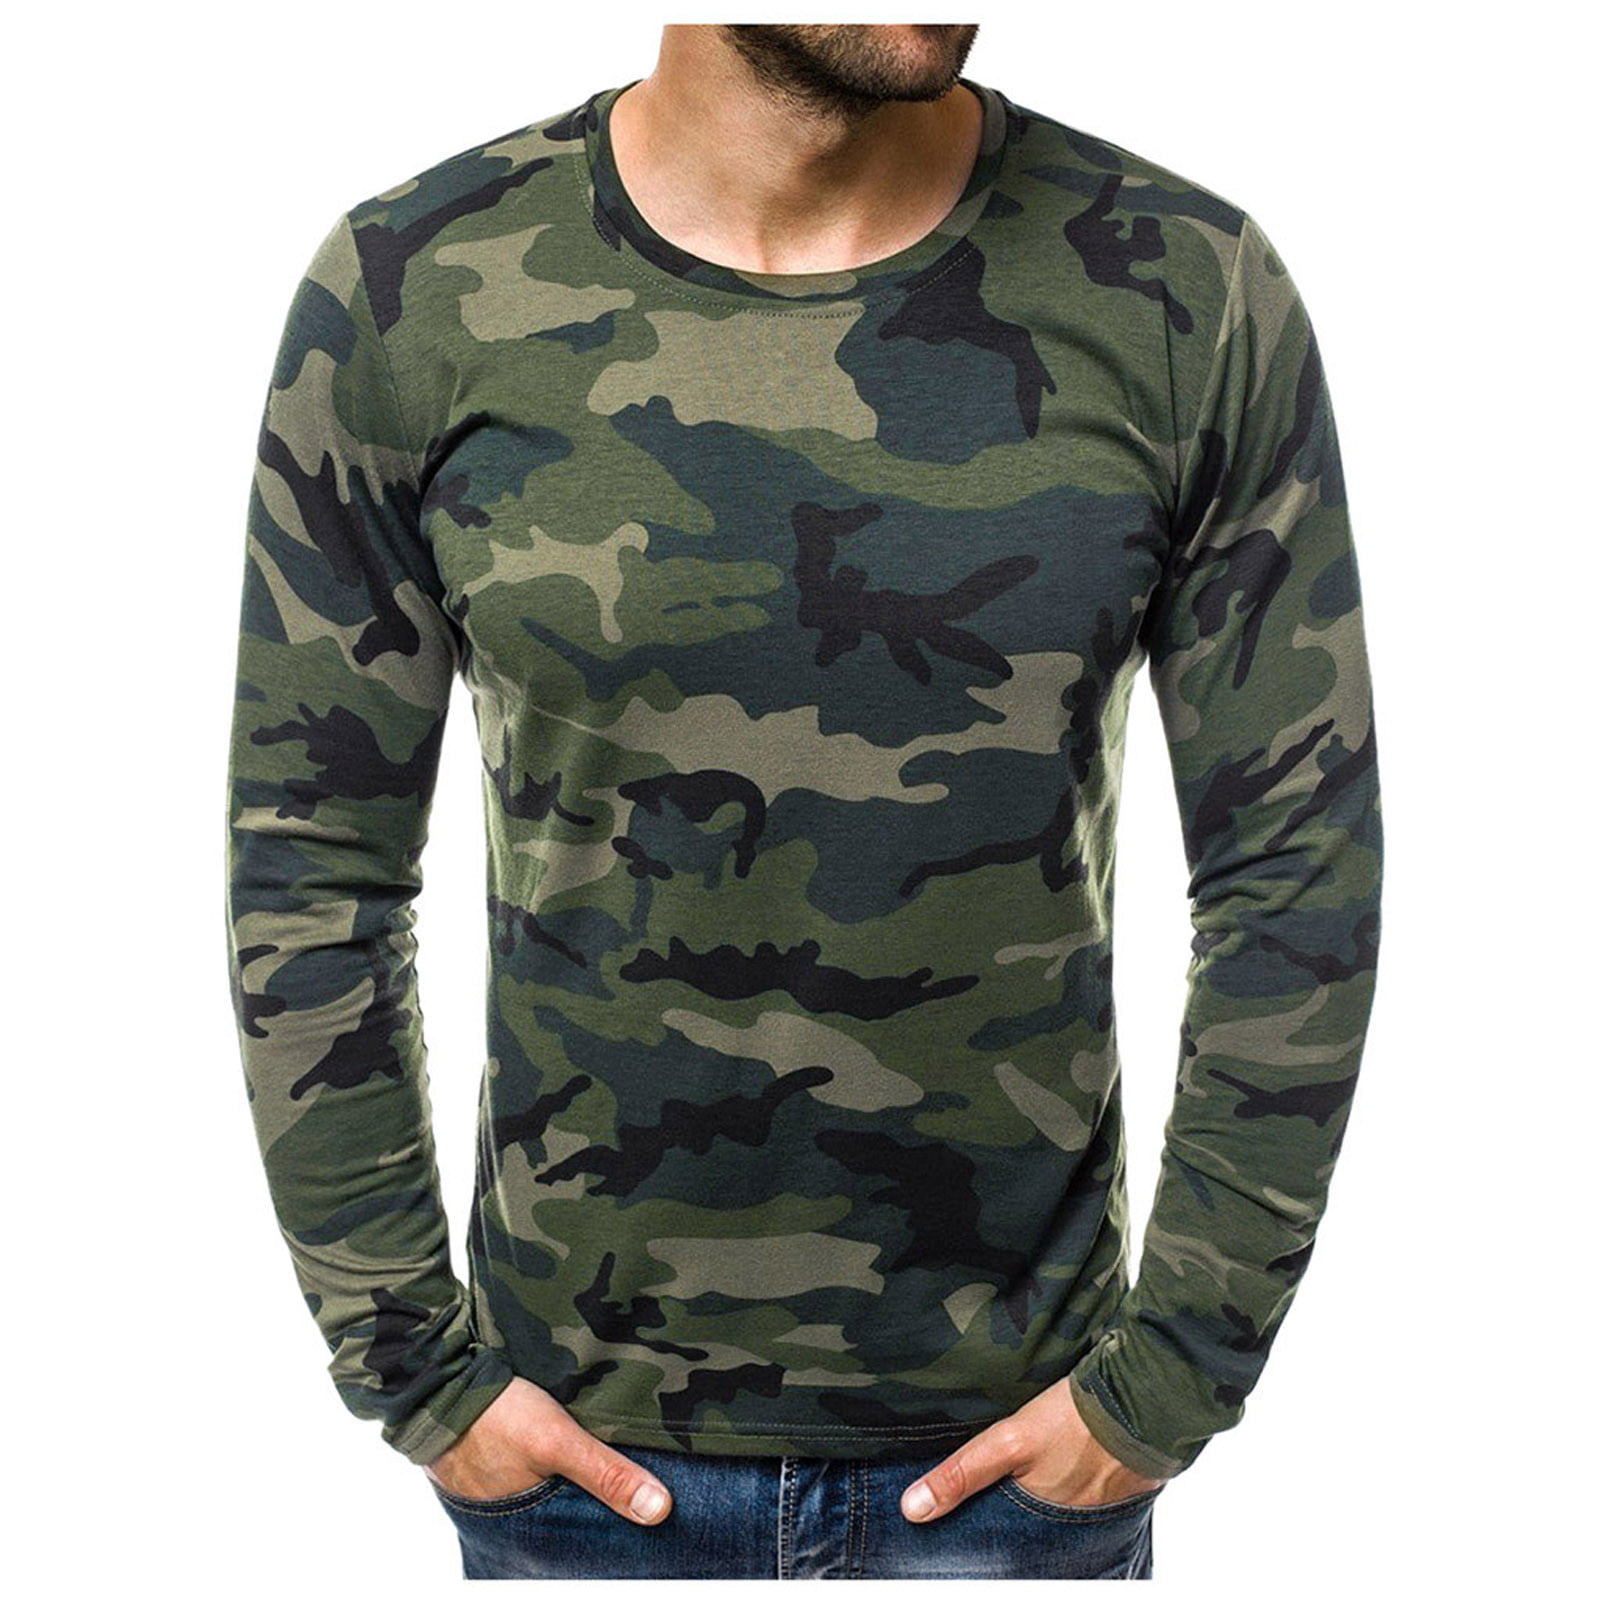 Men's RealTree Edge Camo Long Sleeve T-shirt Camouflage Hunting L 2XL XXL Large 